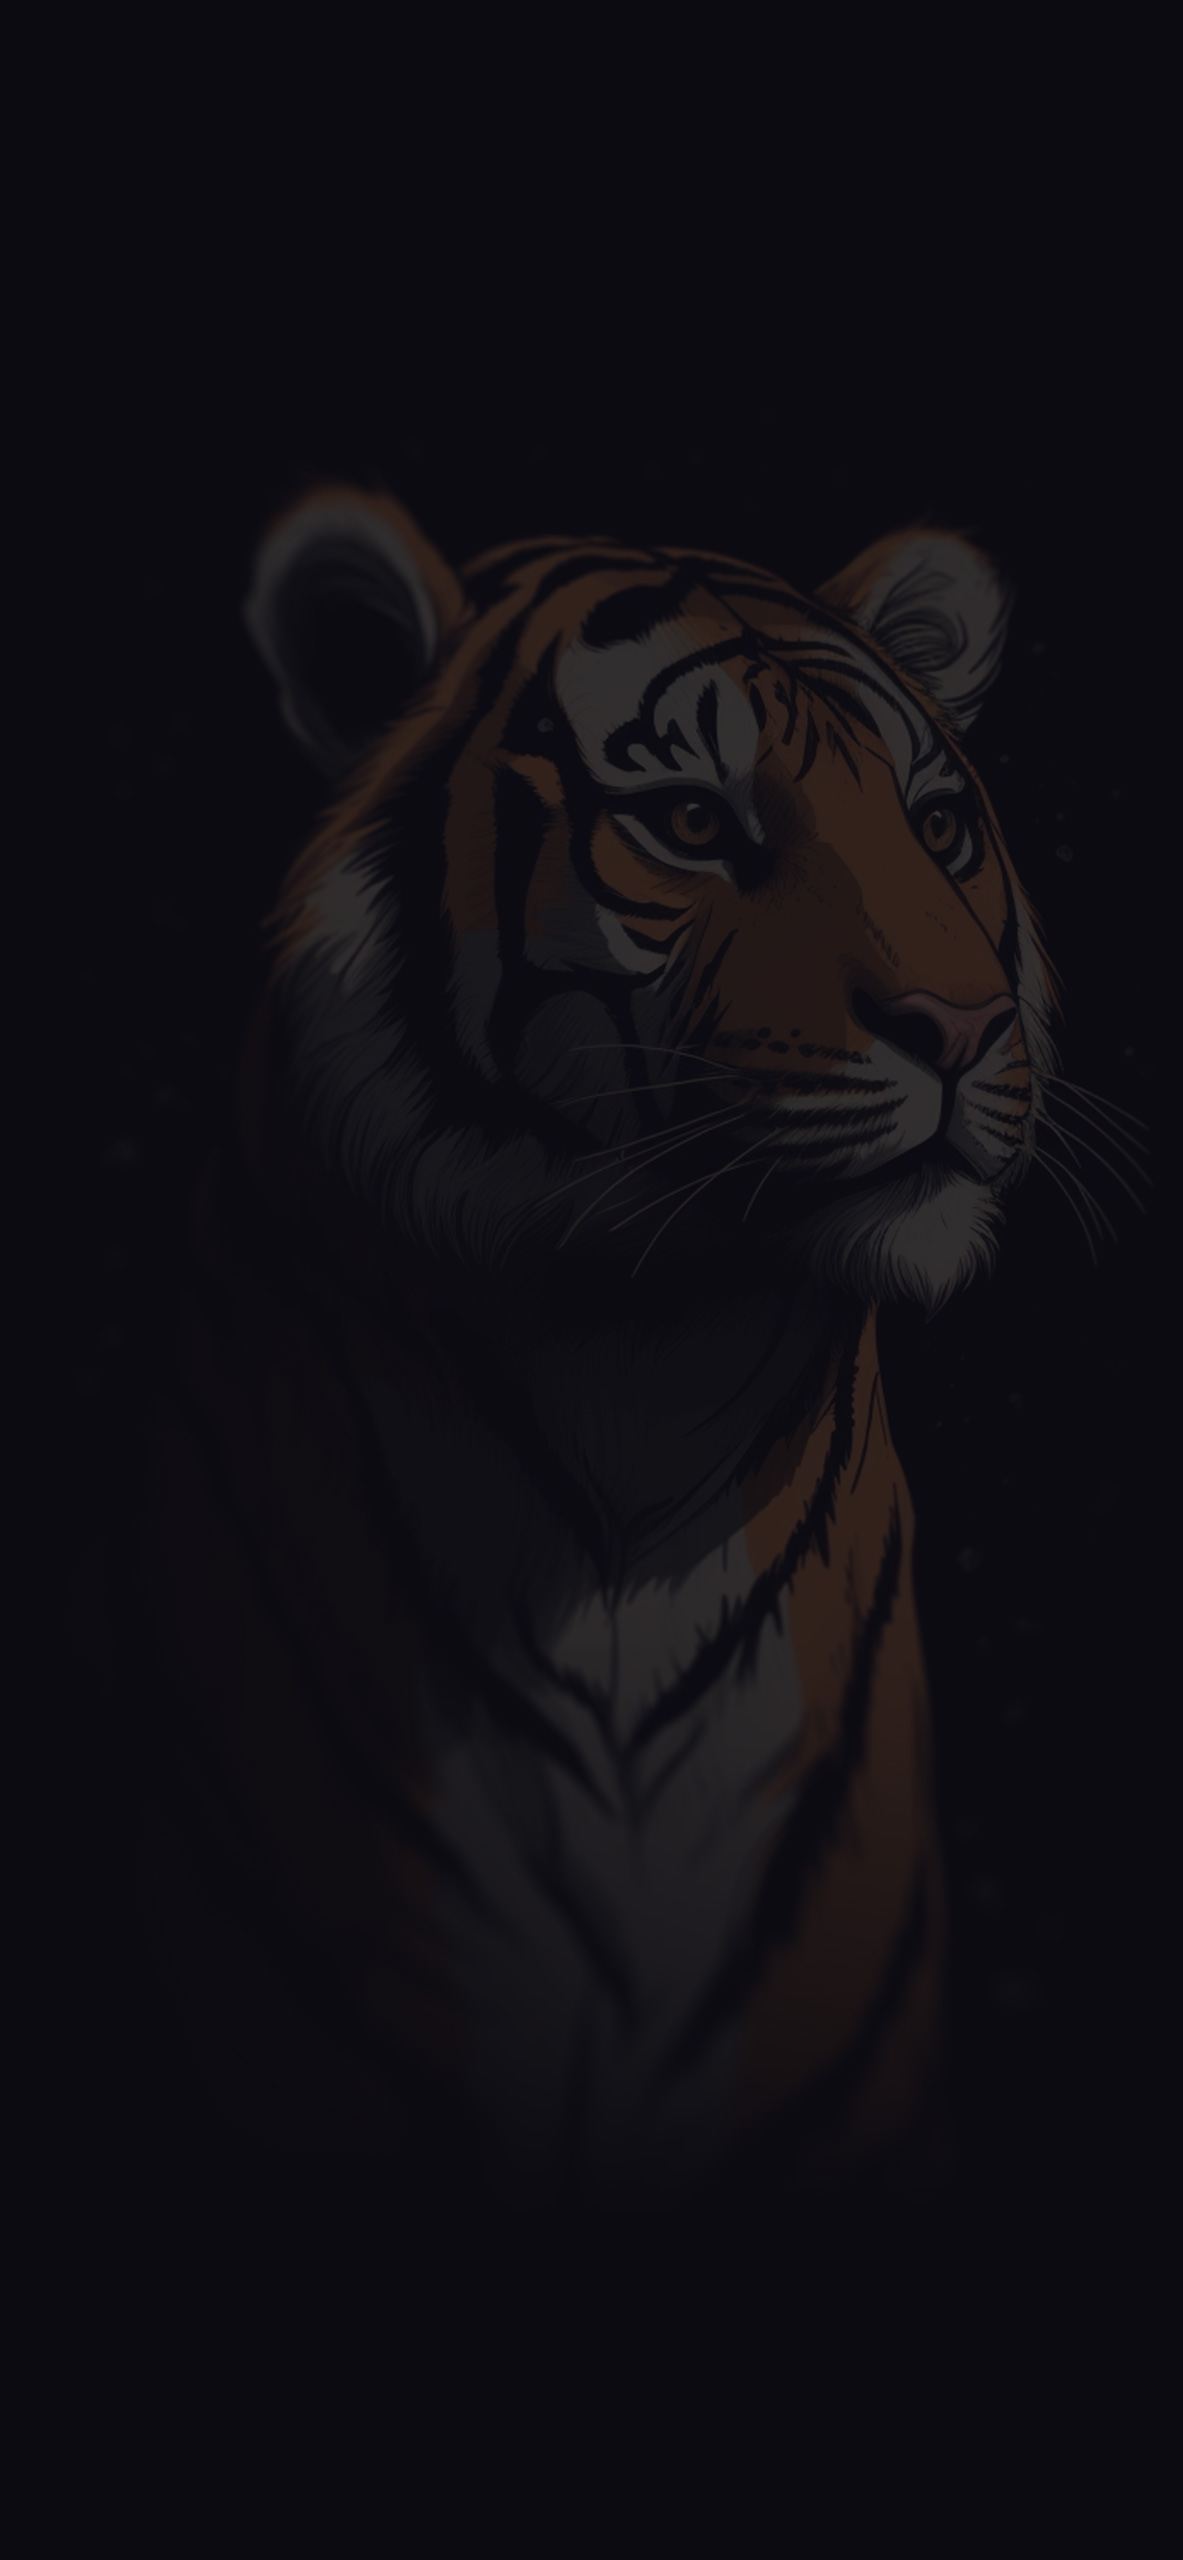 Wallpaper Brown and Black Tiger Illustration Background  Download Free  Image